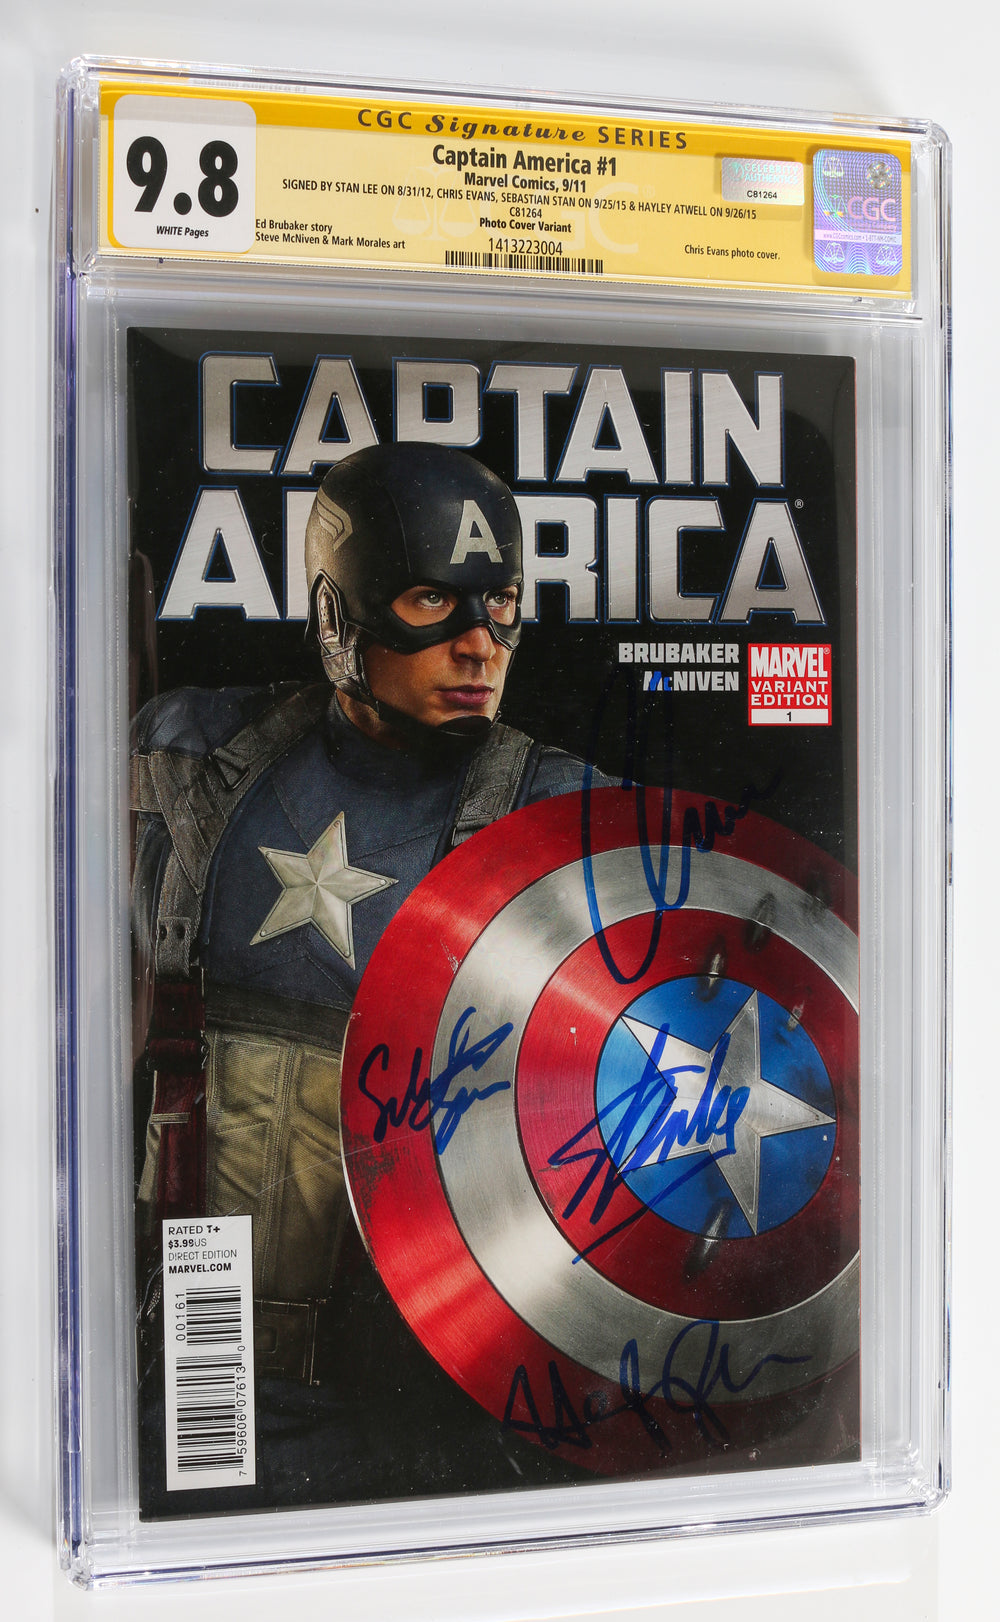 Captain America #1 - Signed by Chris Evans, Hayley Atwell, Sebastian Stan, & Stan Lee (CGC Signature Series 9.8) 2011